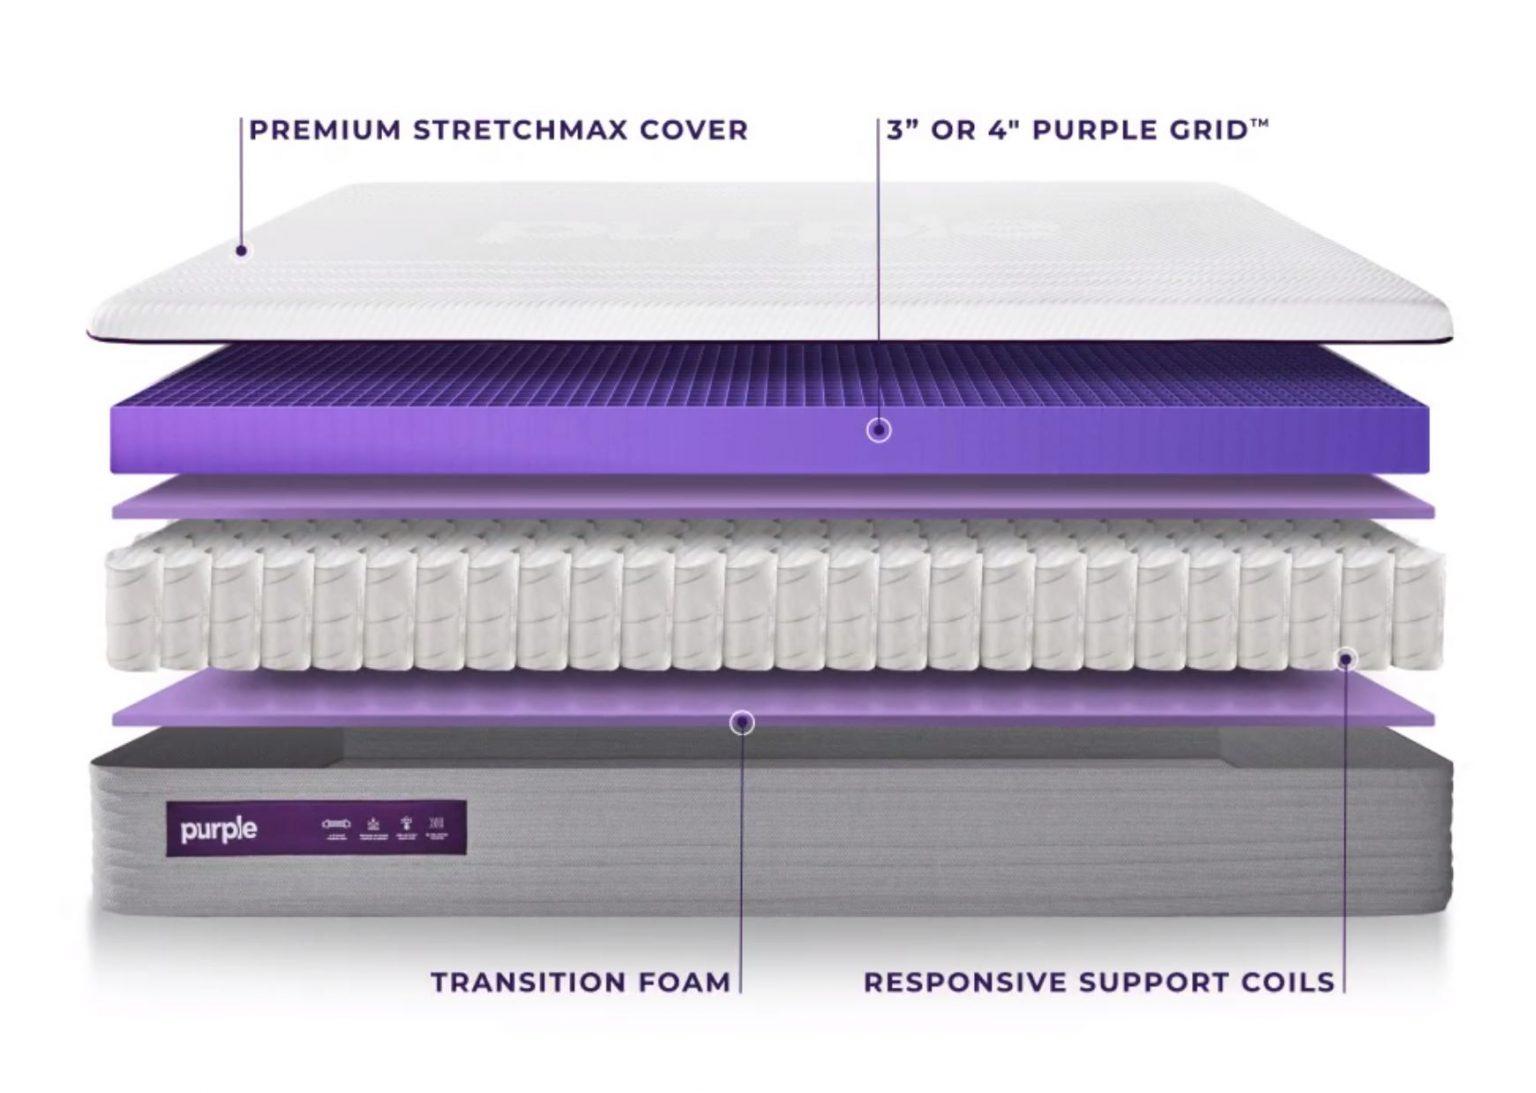 purple mattress weight chart